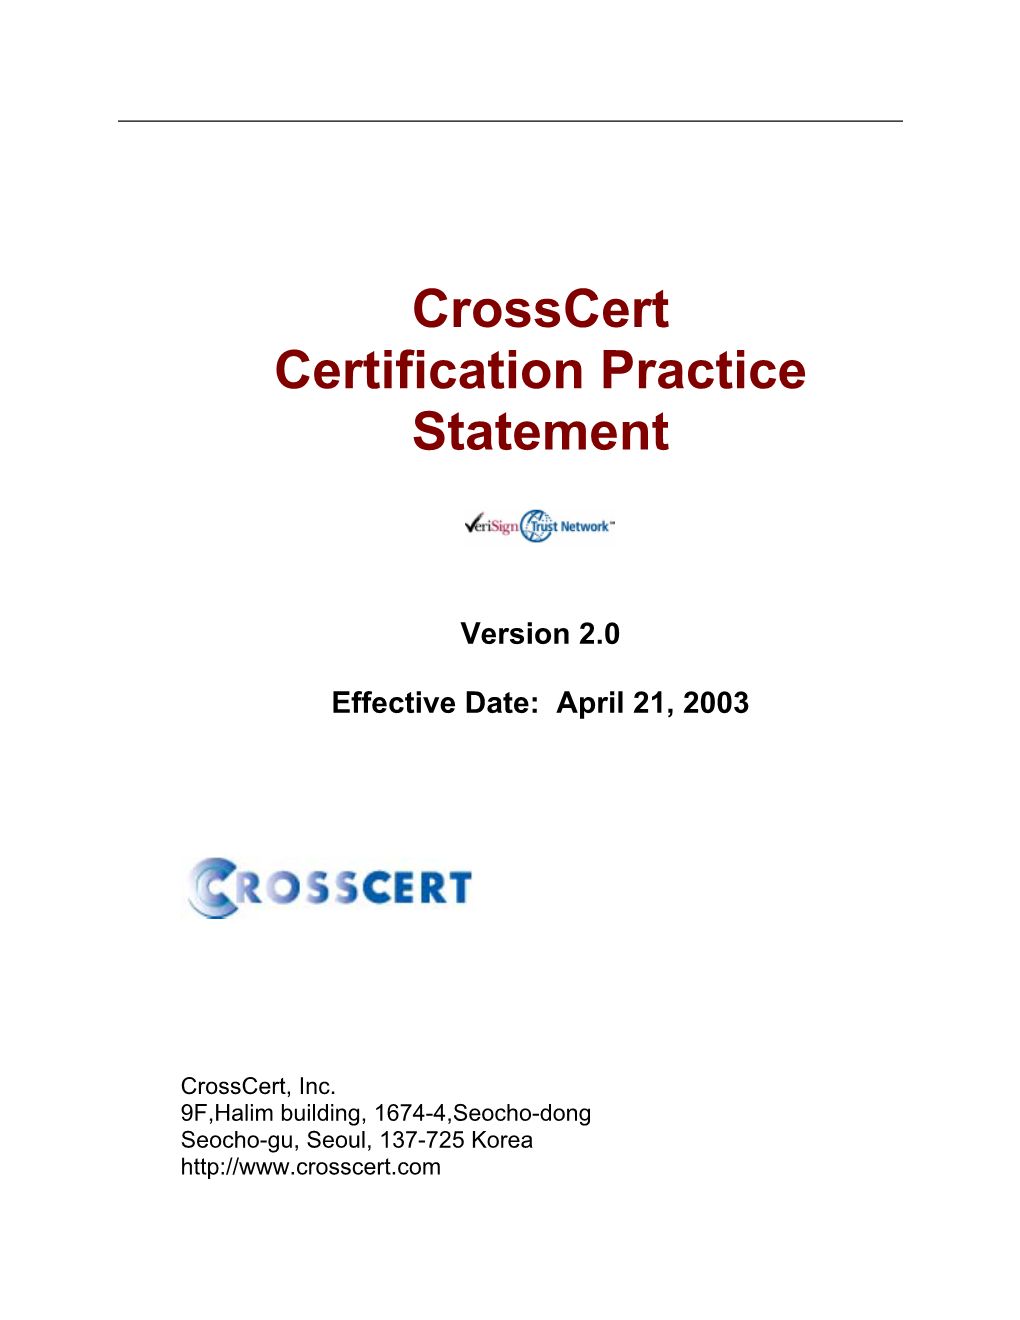 Verisign, Inc. Certification Practices Statement V2.0